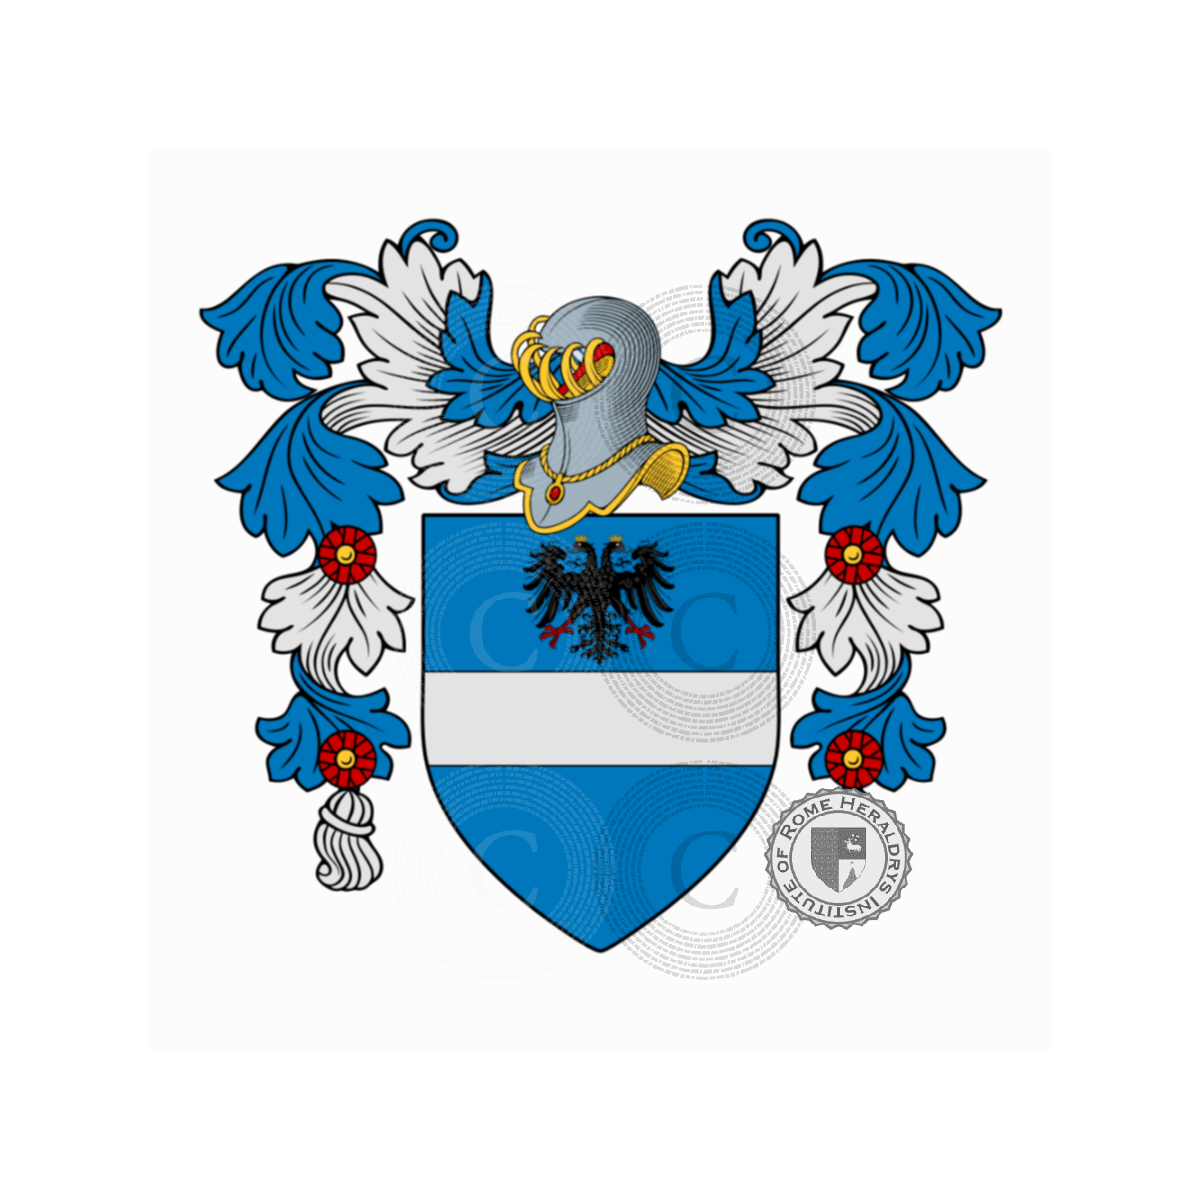 Wappen der FamiliePorto